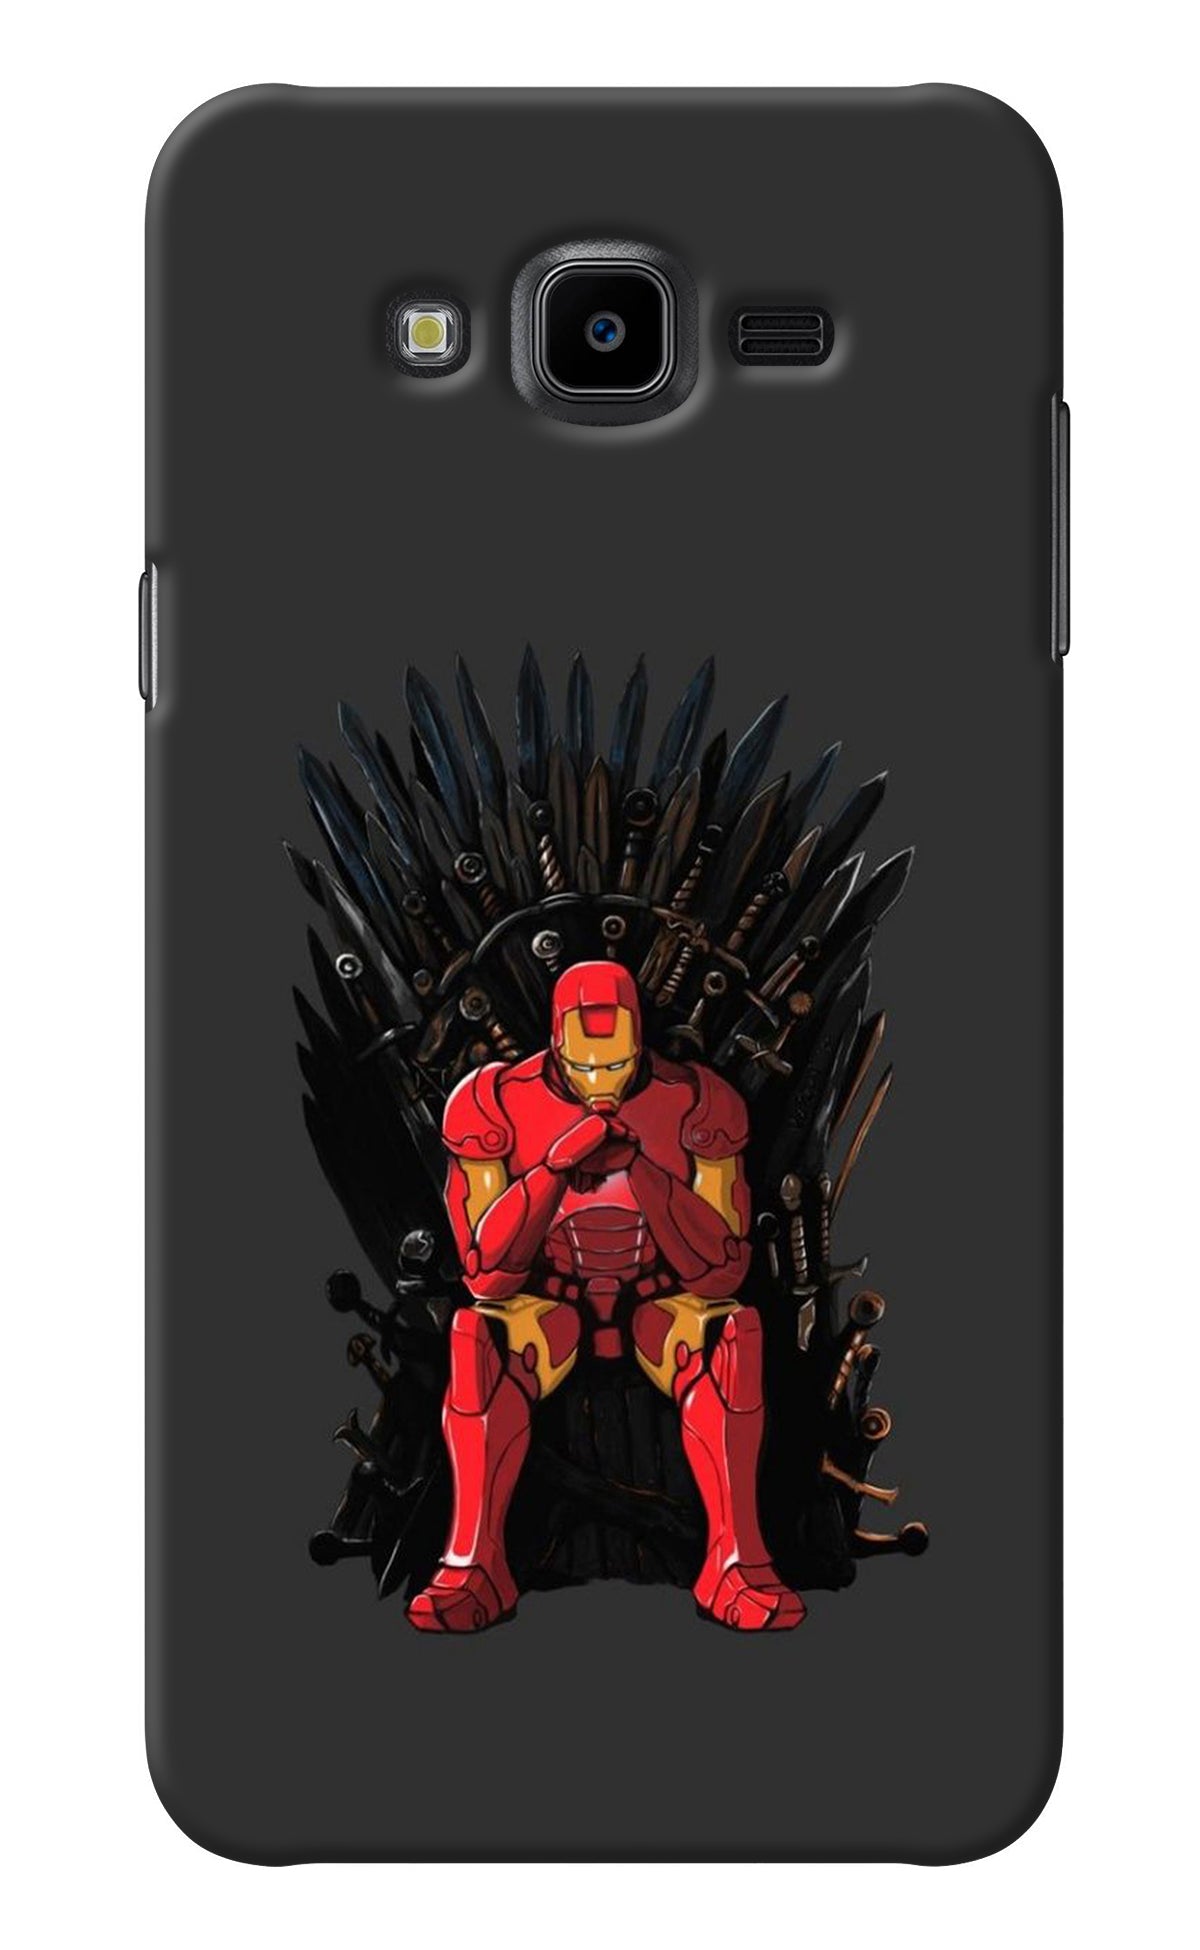 Ironman Throne Samsung J7 Nxt Back Cover